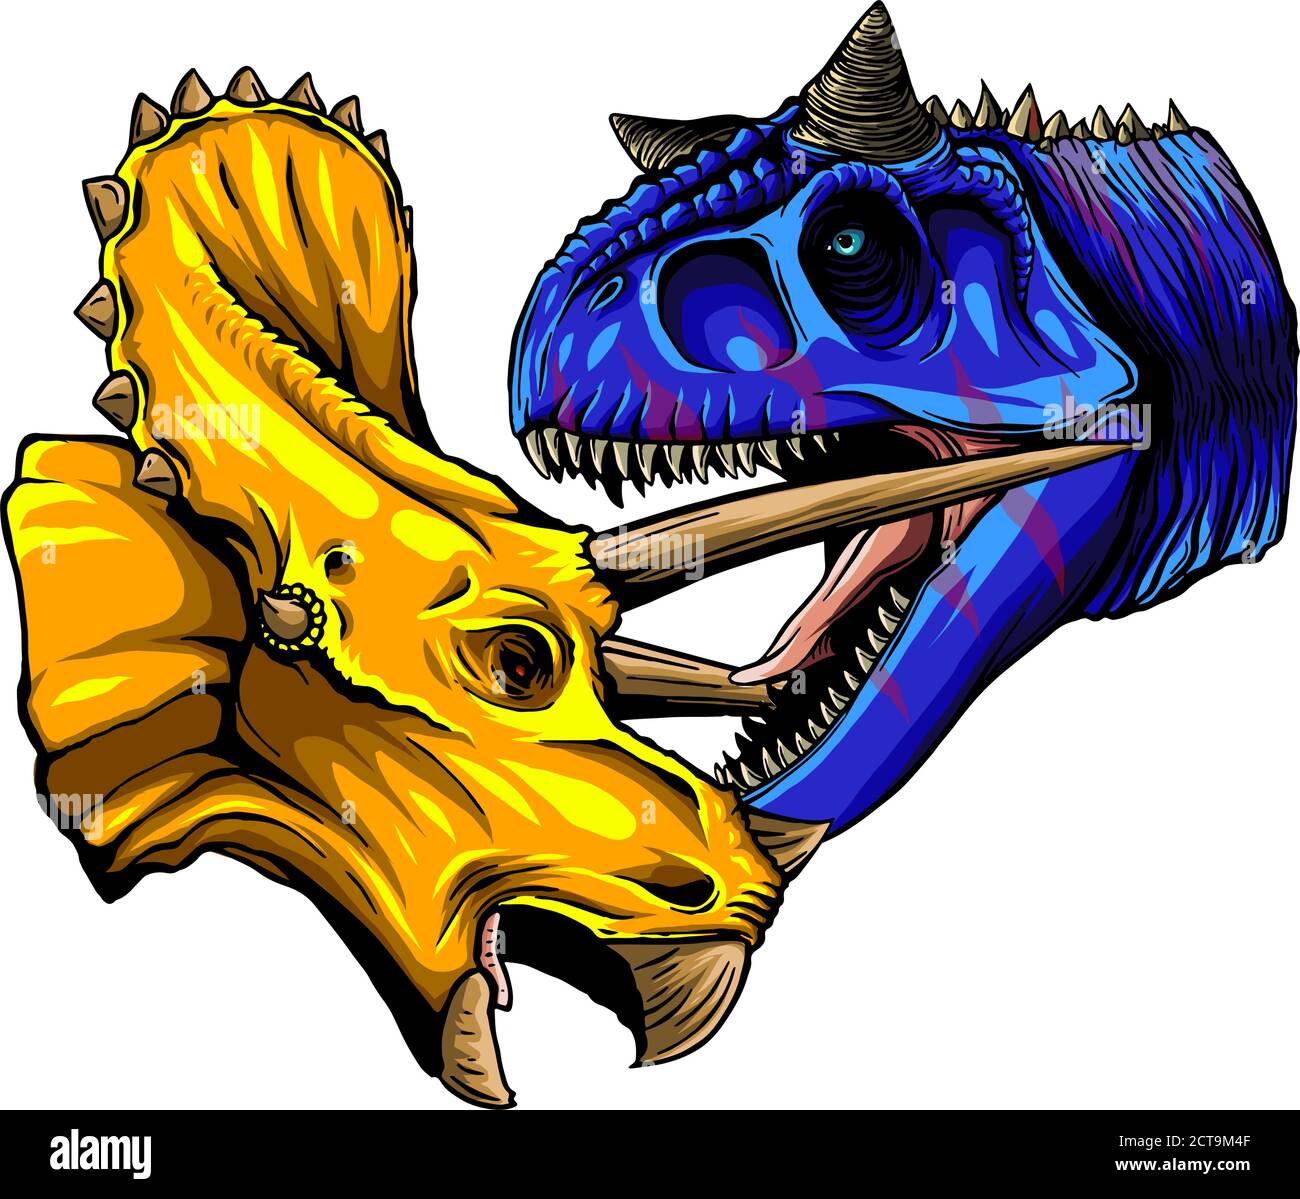 T Rex contre Triceratops illustration avec un tyrannosaures rex attaquer un dinosaure triceratops Illustration de Vecteur